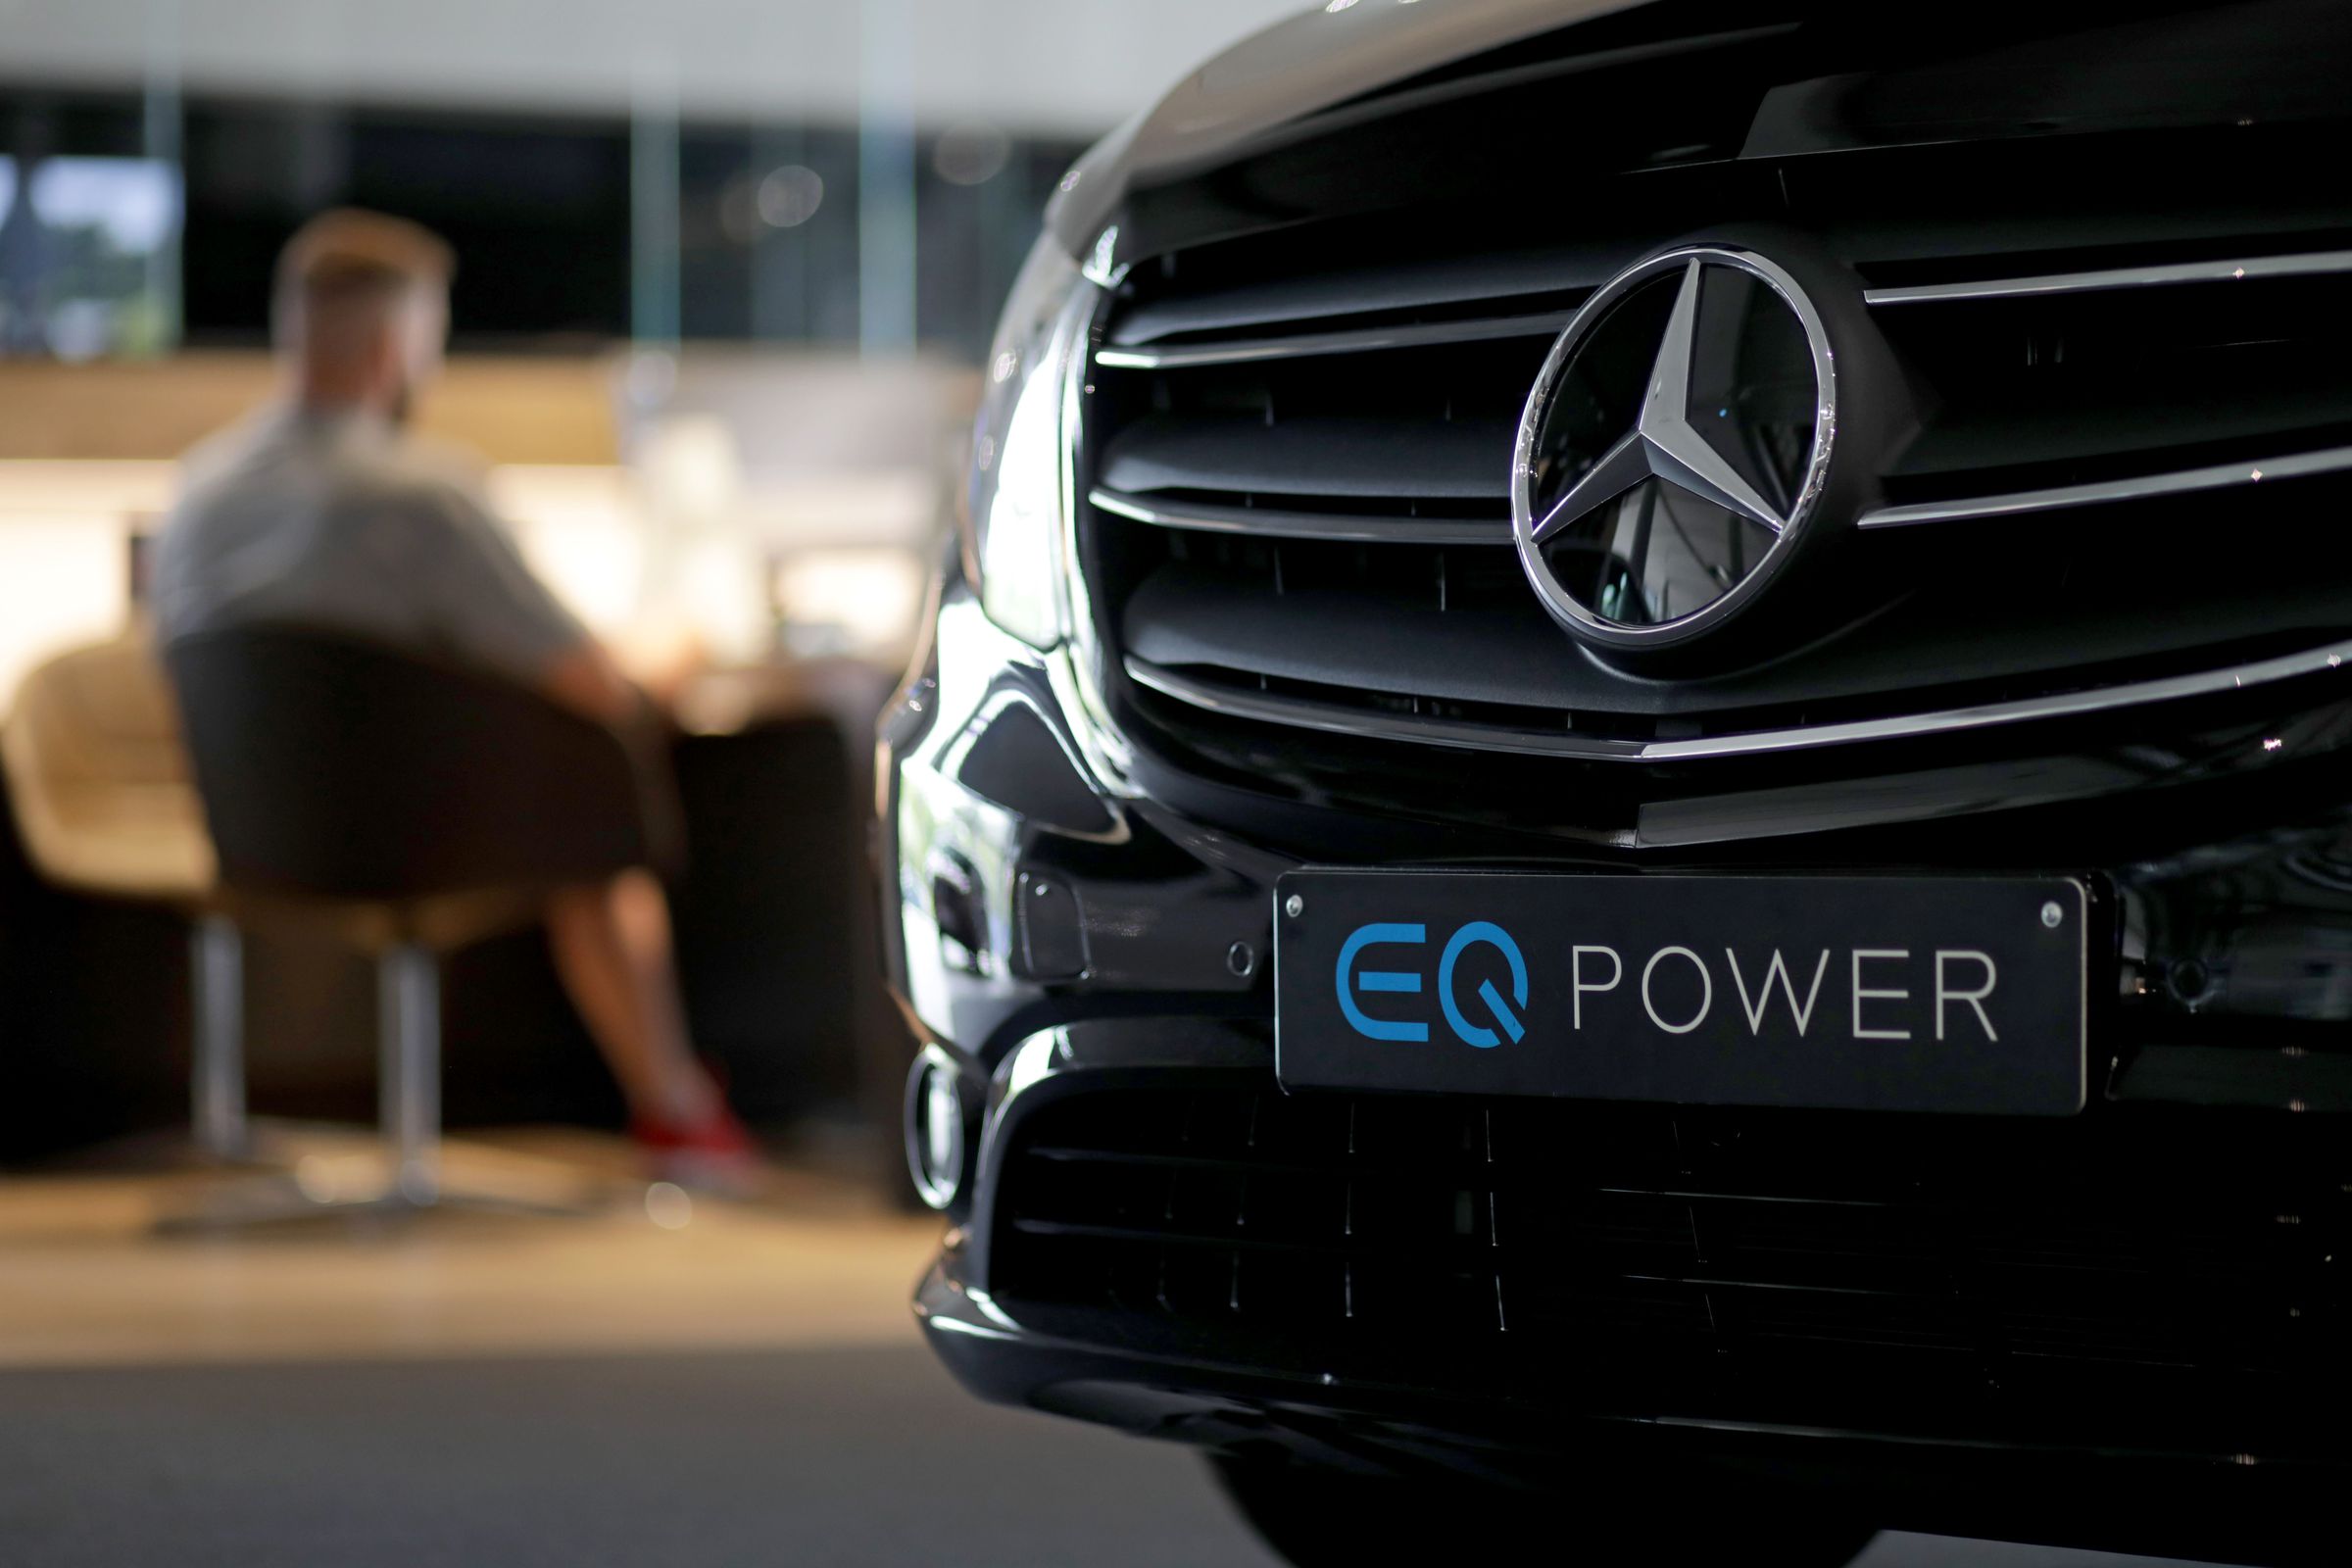 Mercedes-Benz AG Auto Showroom Ahead of Earnings